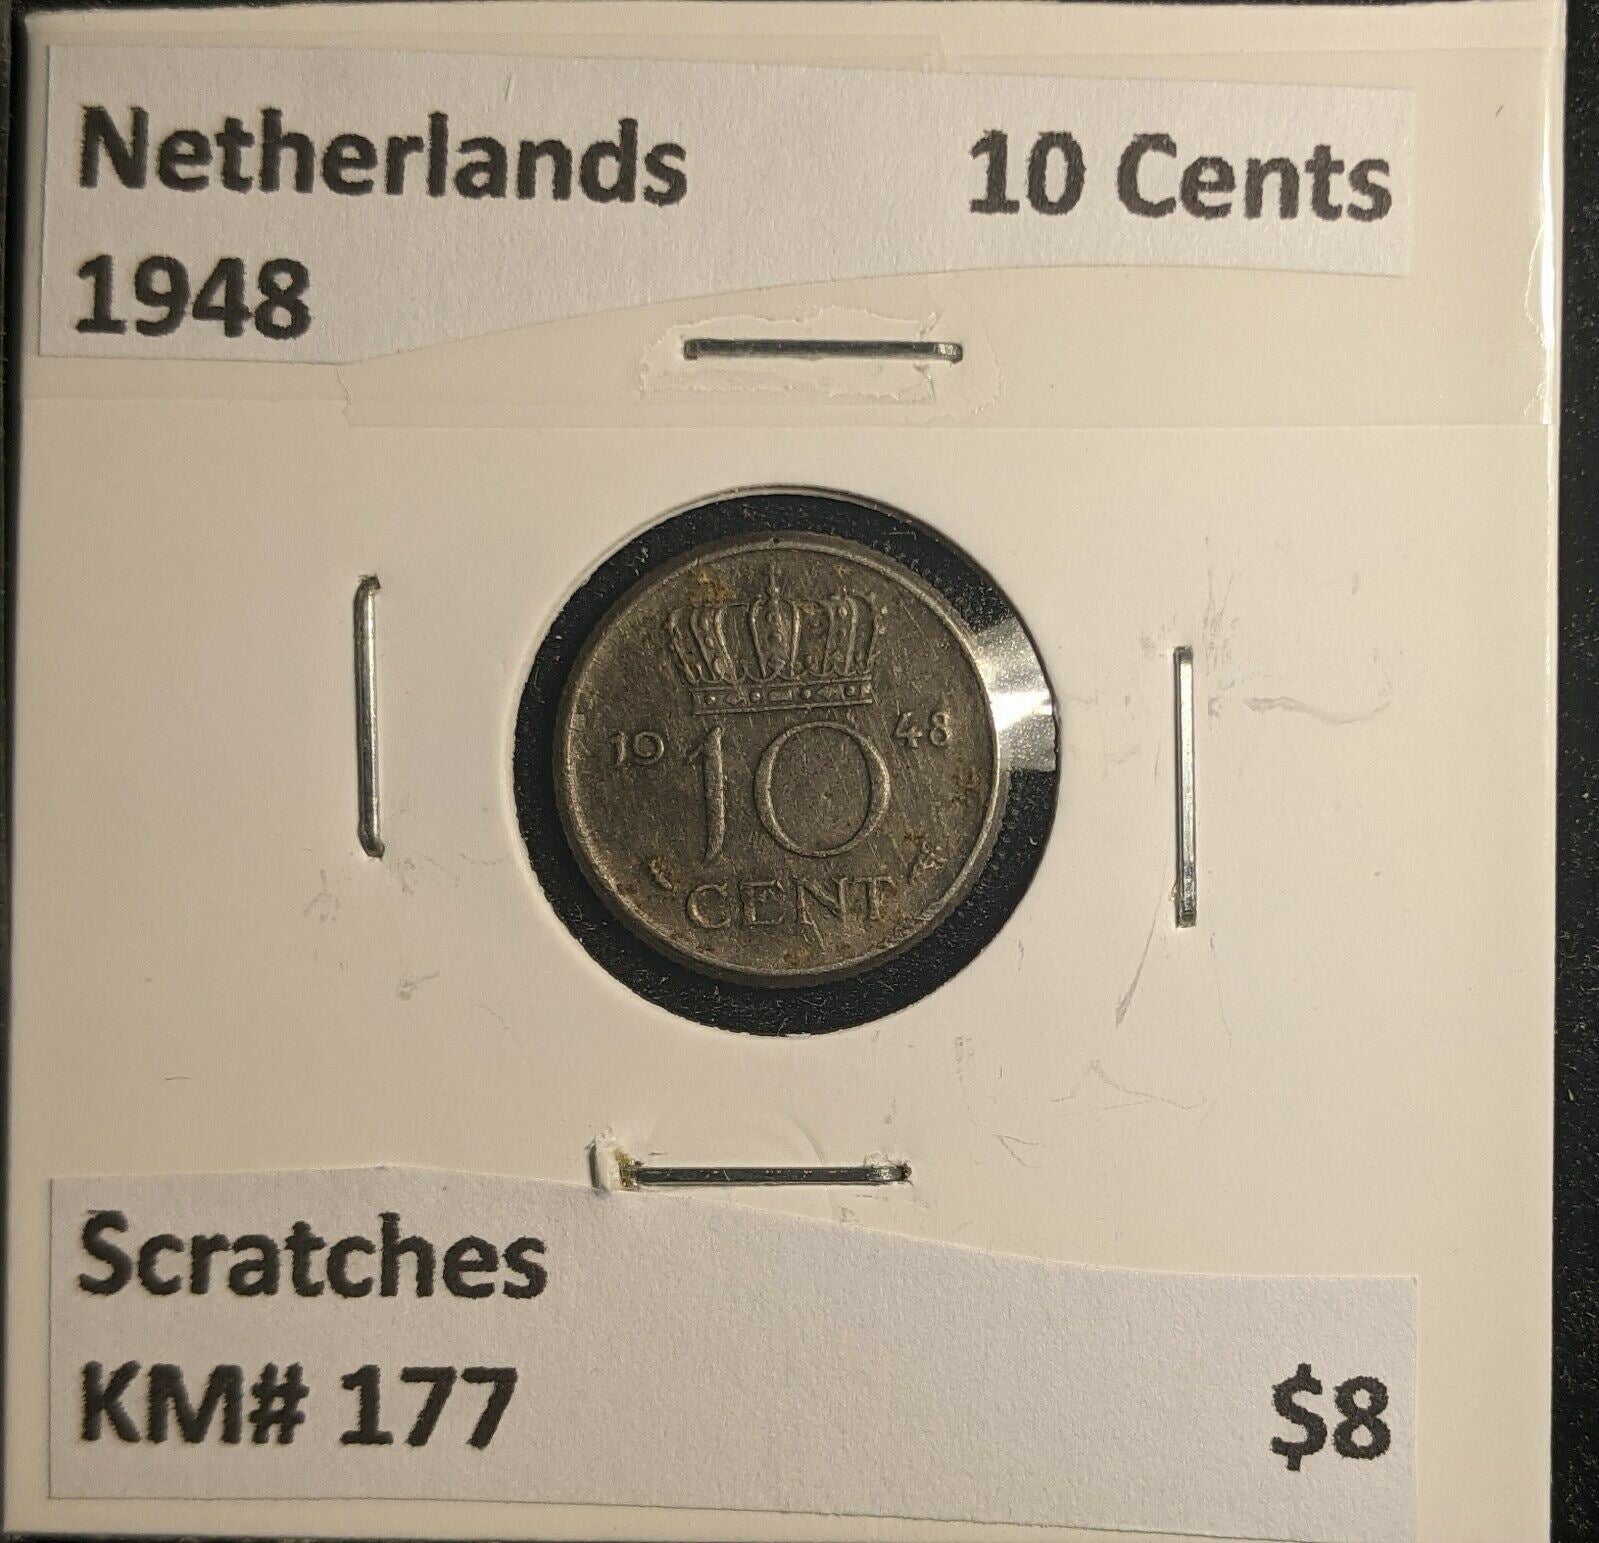 Netherlands 1948 10 Cents KM# 177 Scratches #514 6B